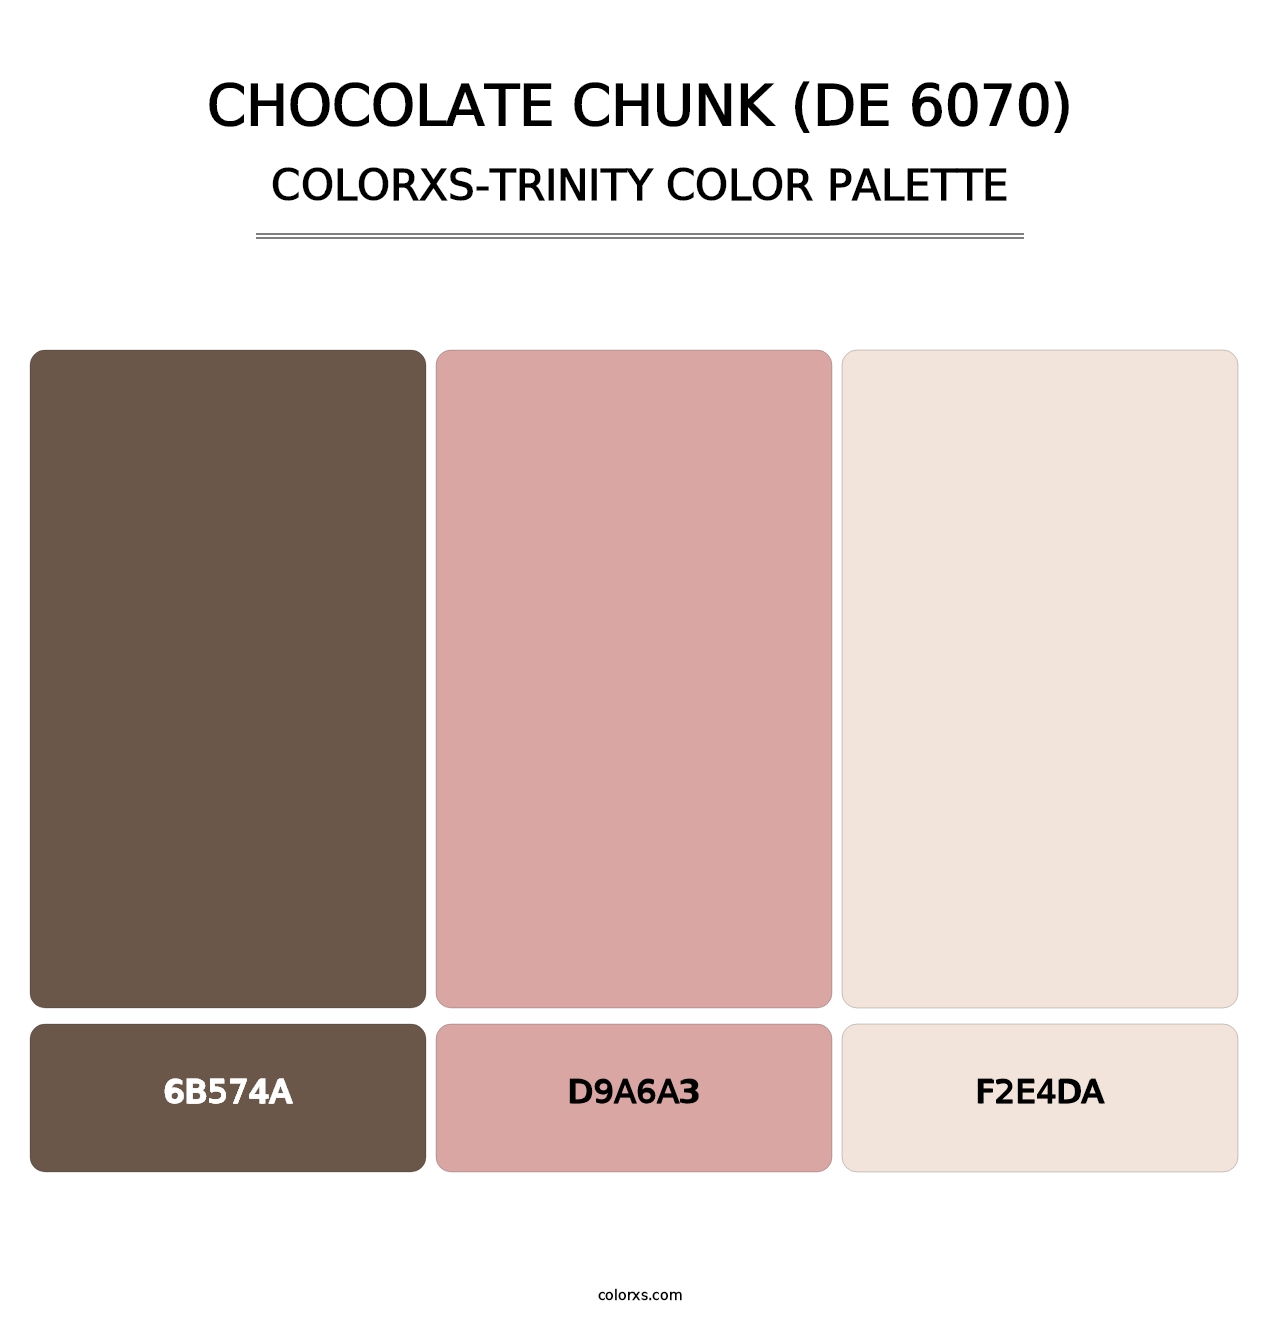 Chocolate Chunk (DE 6070) - Colorxs Trinity Palette